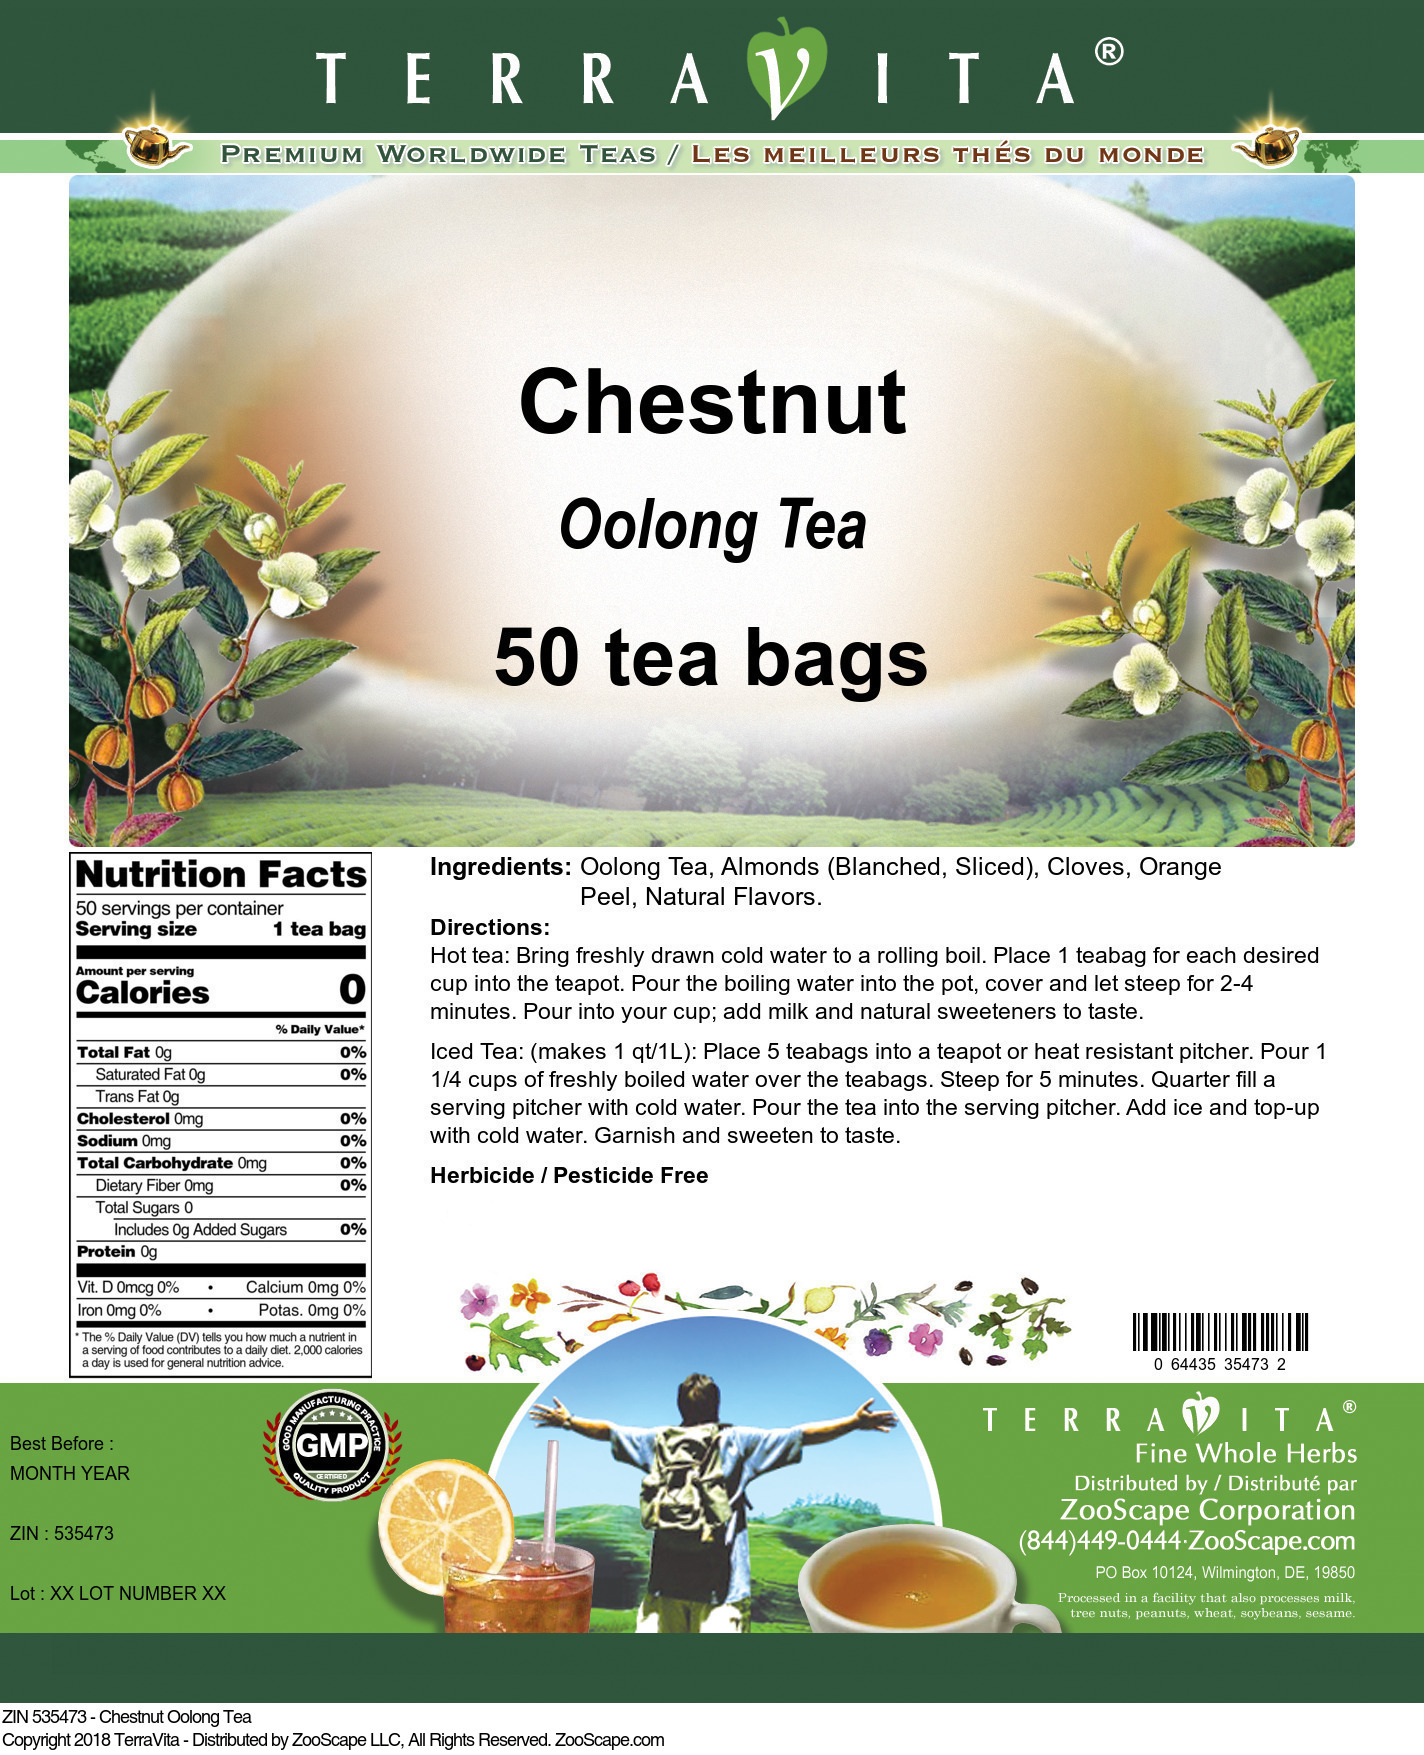 Chestnut Oolong Tea - Label